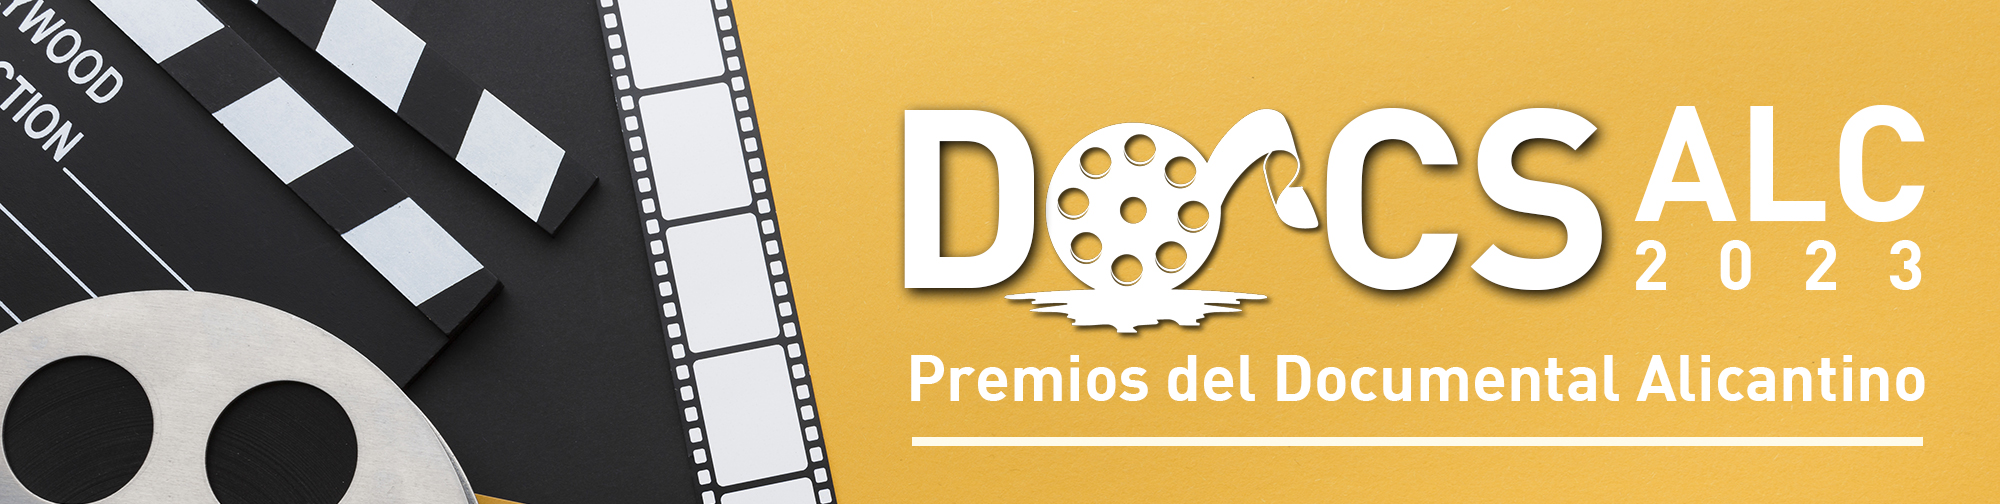 Premios del Documental Alicantino 2023 - DOCS ALC